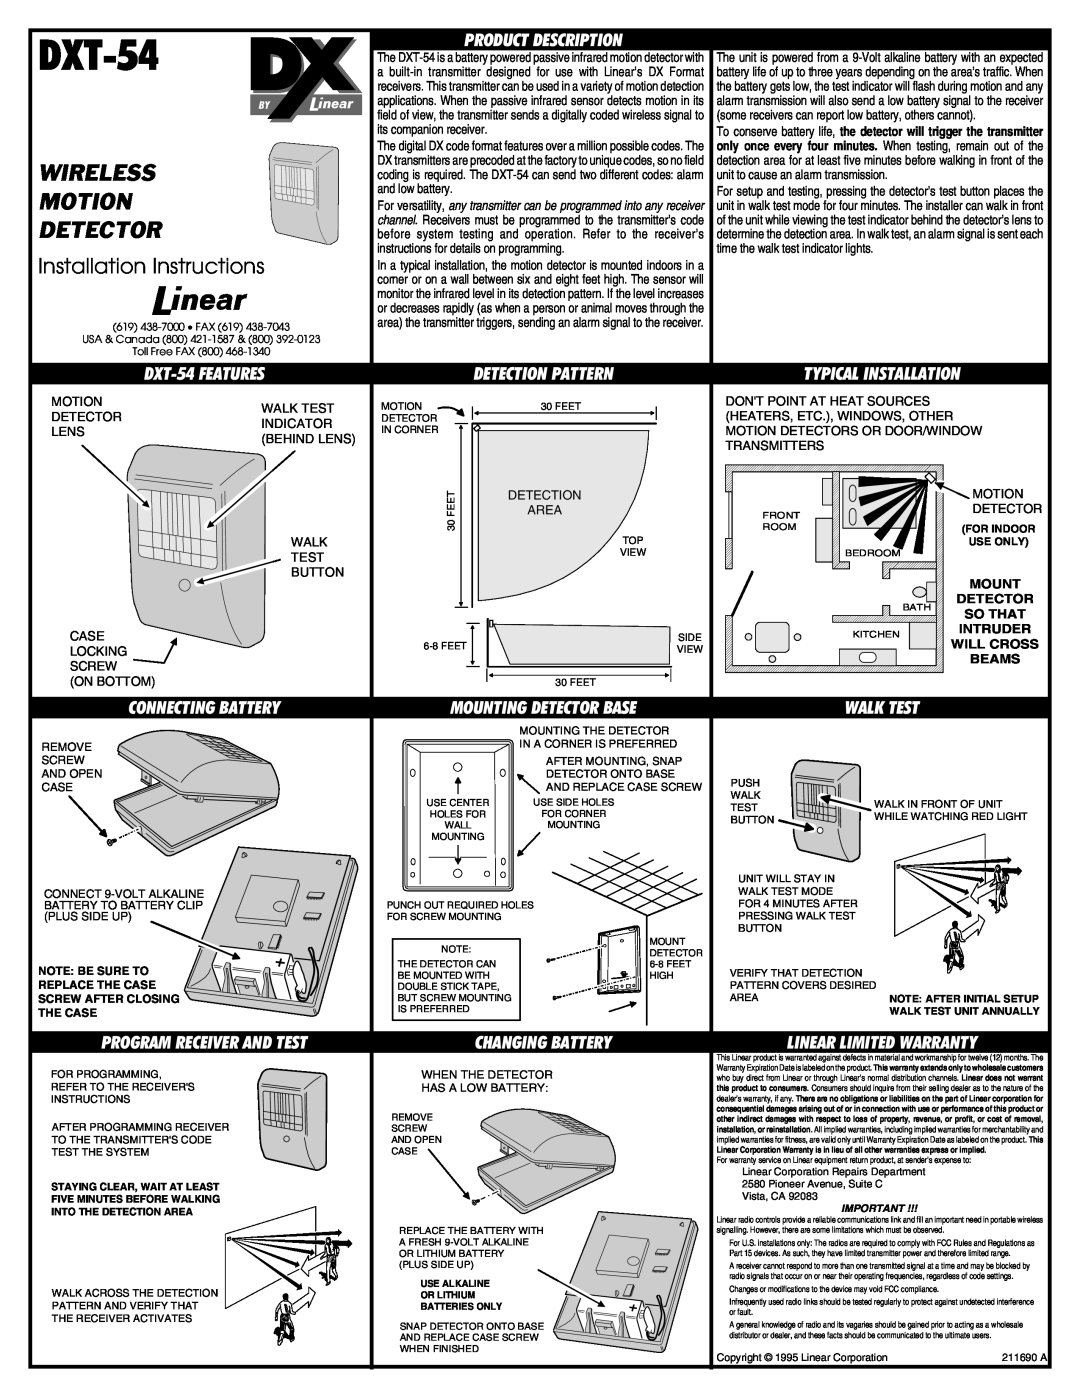 Linear DXT-54 installation instructions Wireless Motion Detector, Installation Instructions 